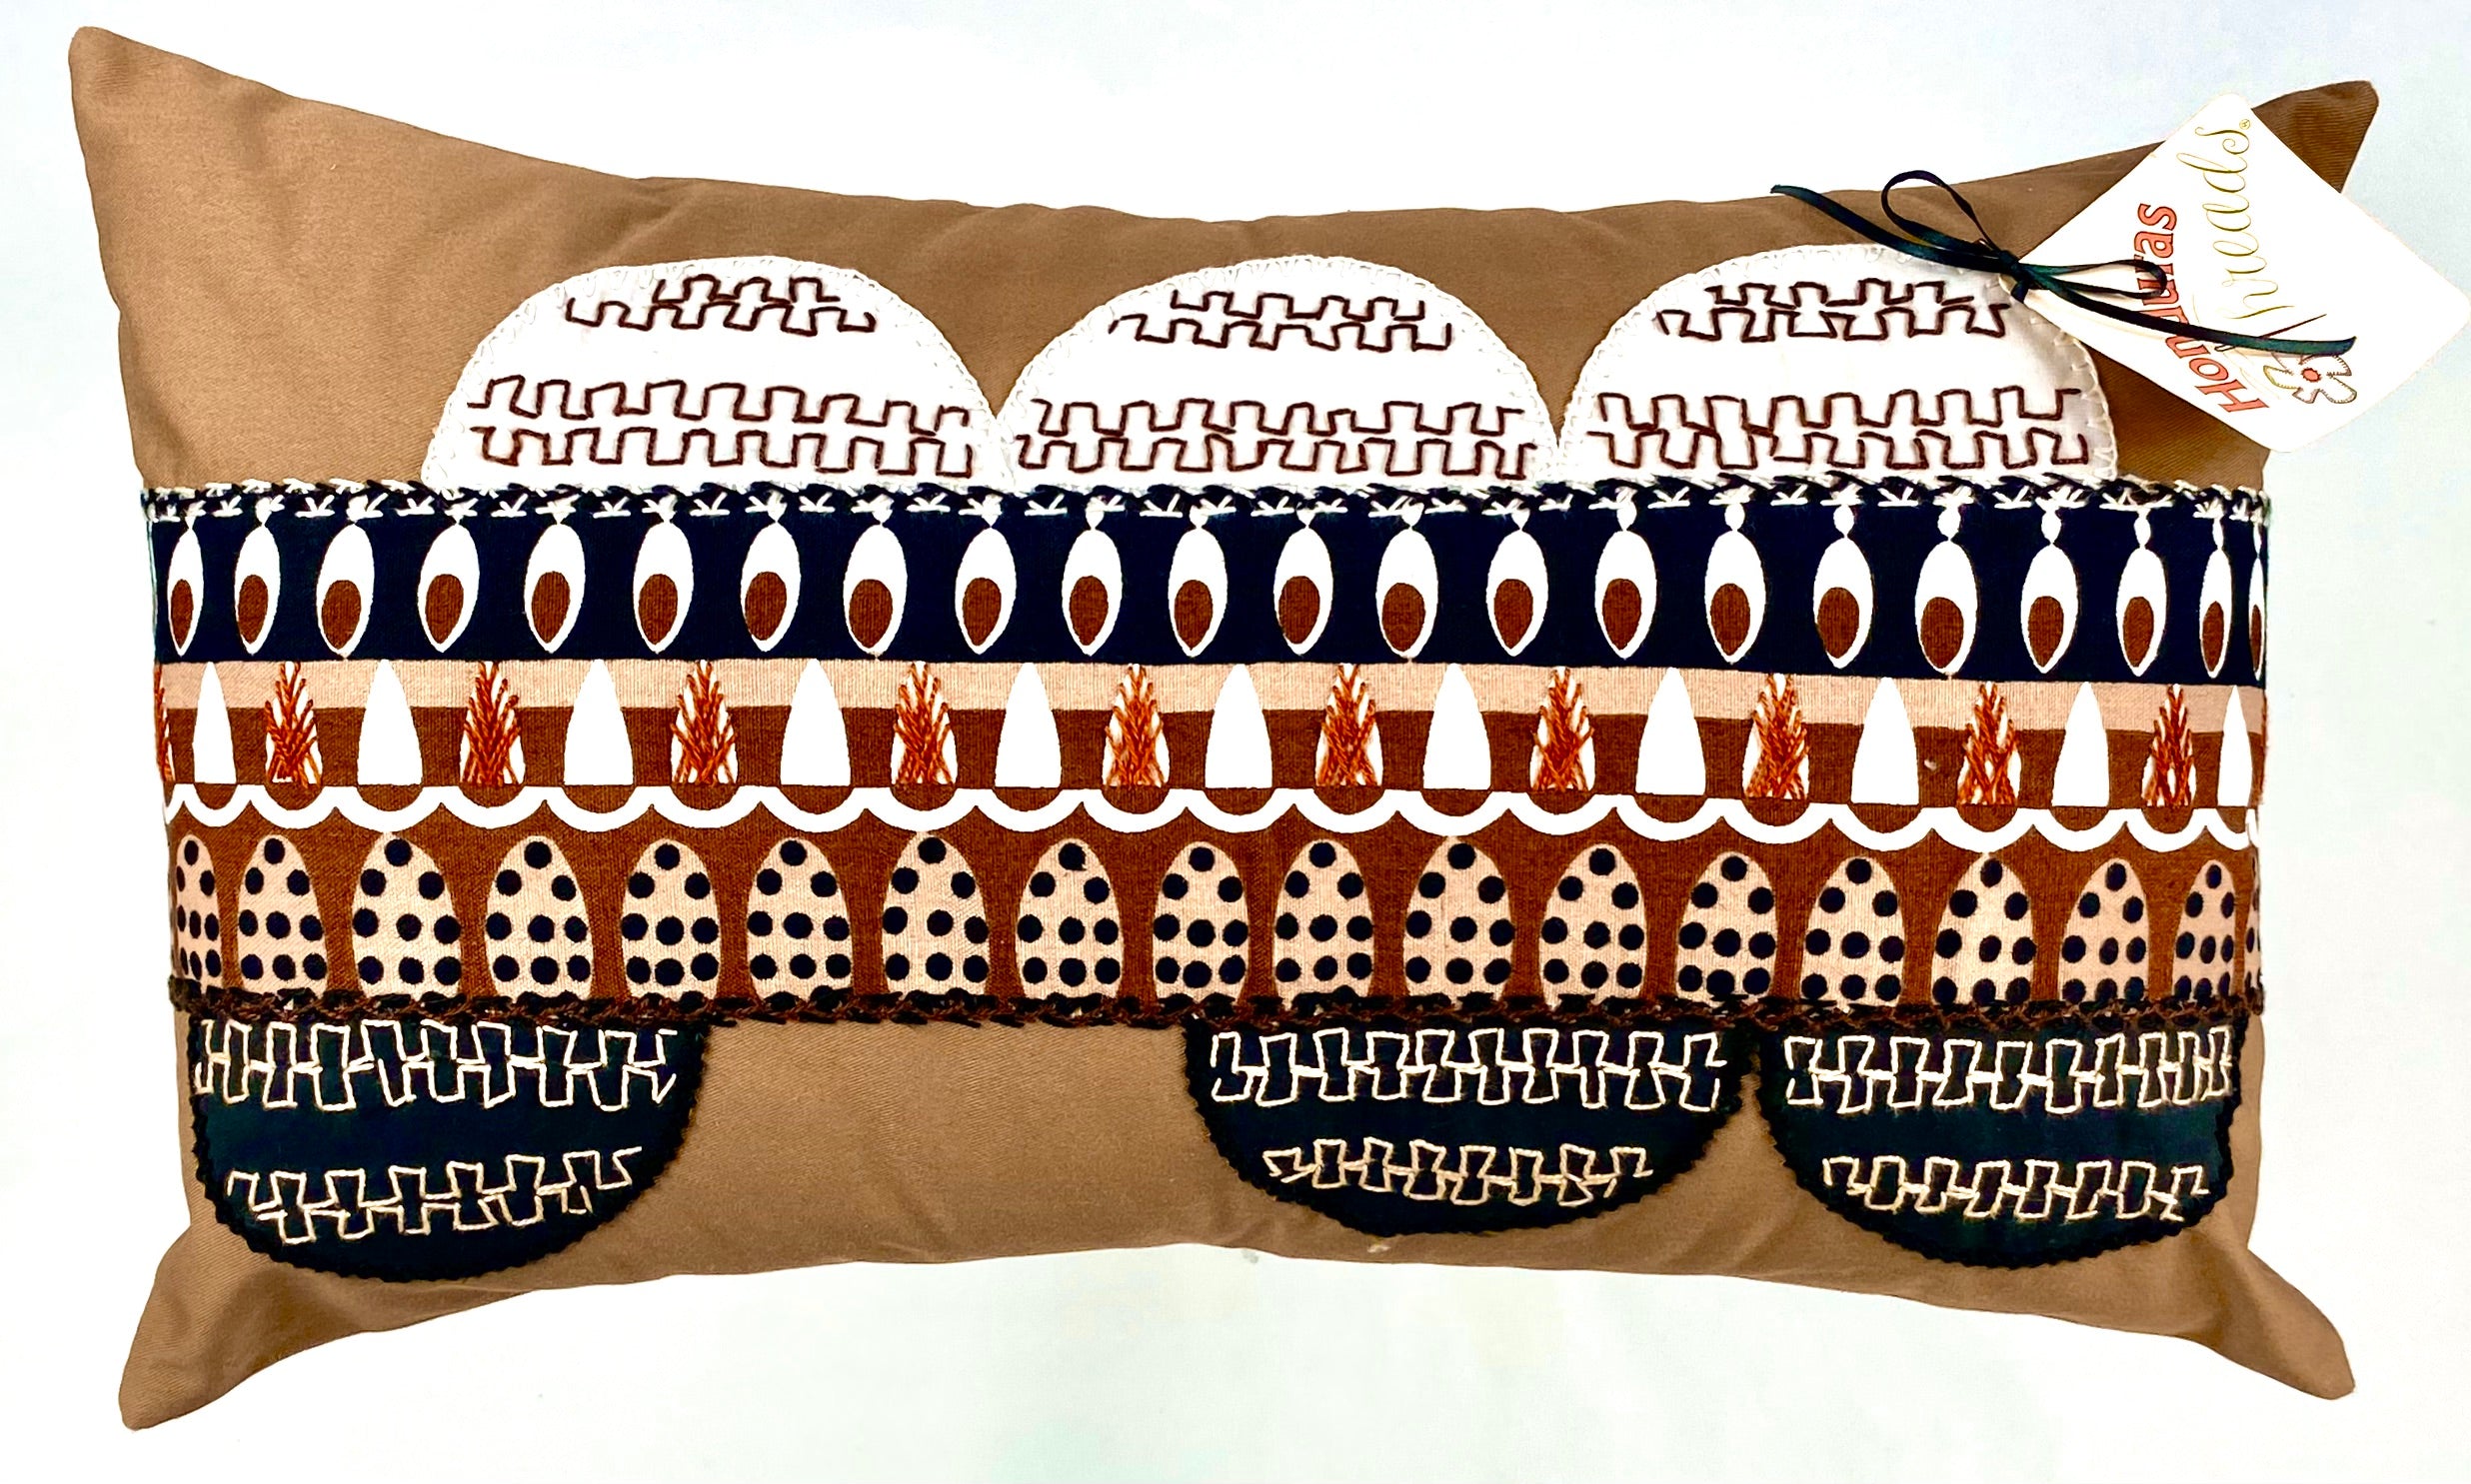 Copy of Piedras Lunar Design Embroidered Pillow on brown Honduras Threads